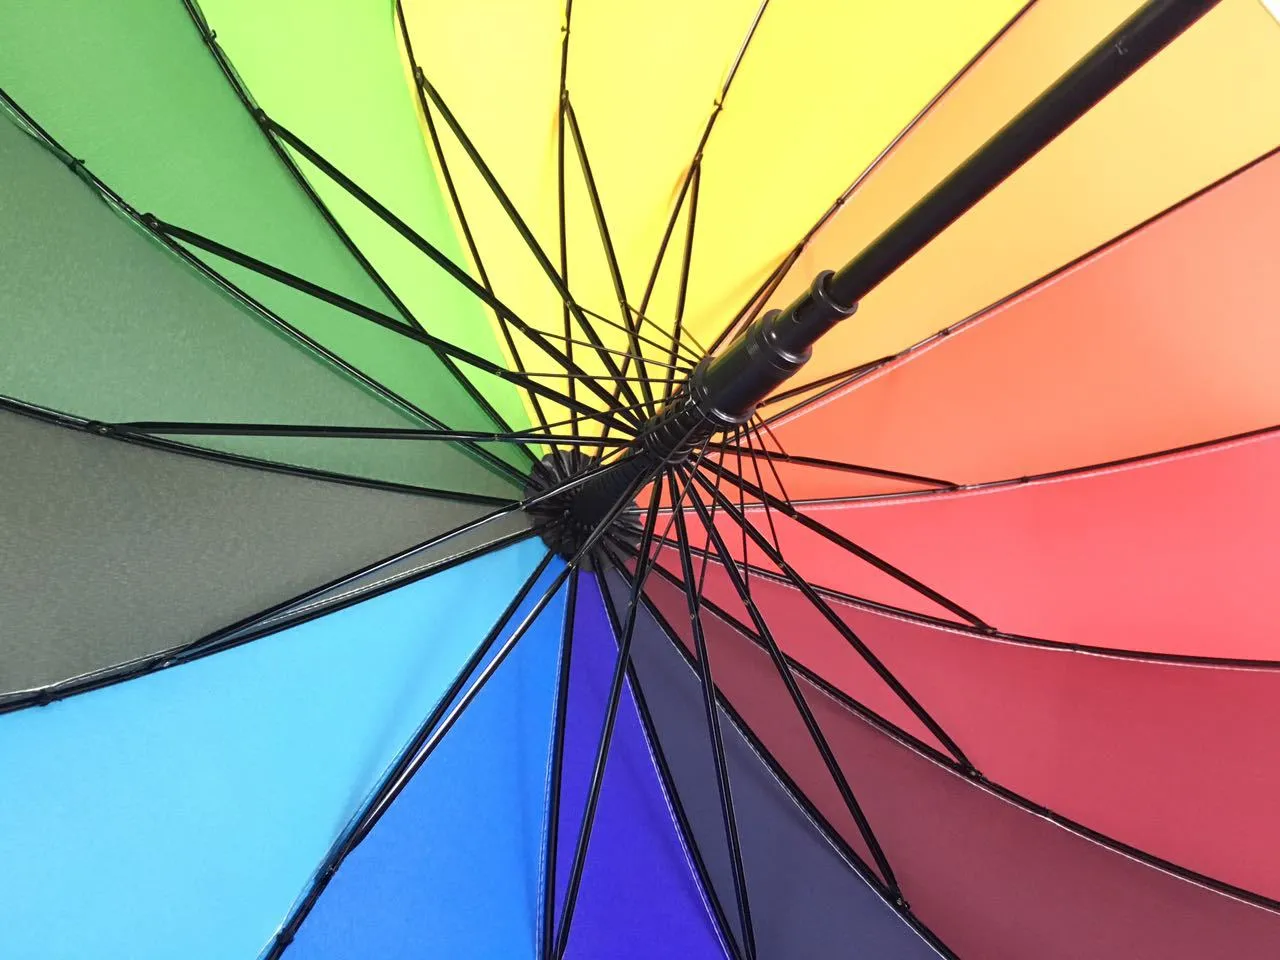 C haak regenboog paraplu lange handvat 16k recht winddicht kleurrijke pongee paraplu vrouwen mannen zonnige regenachtige paraplu HH7-1116